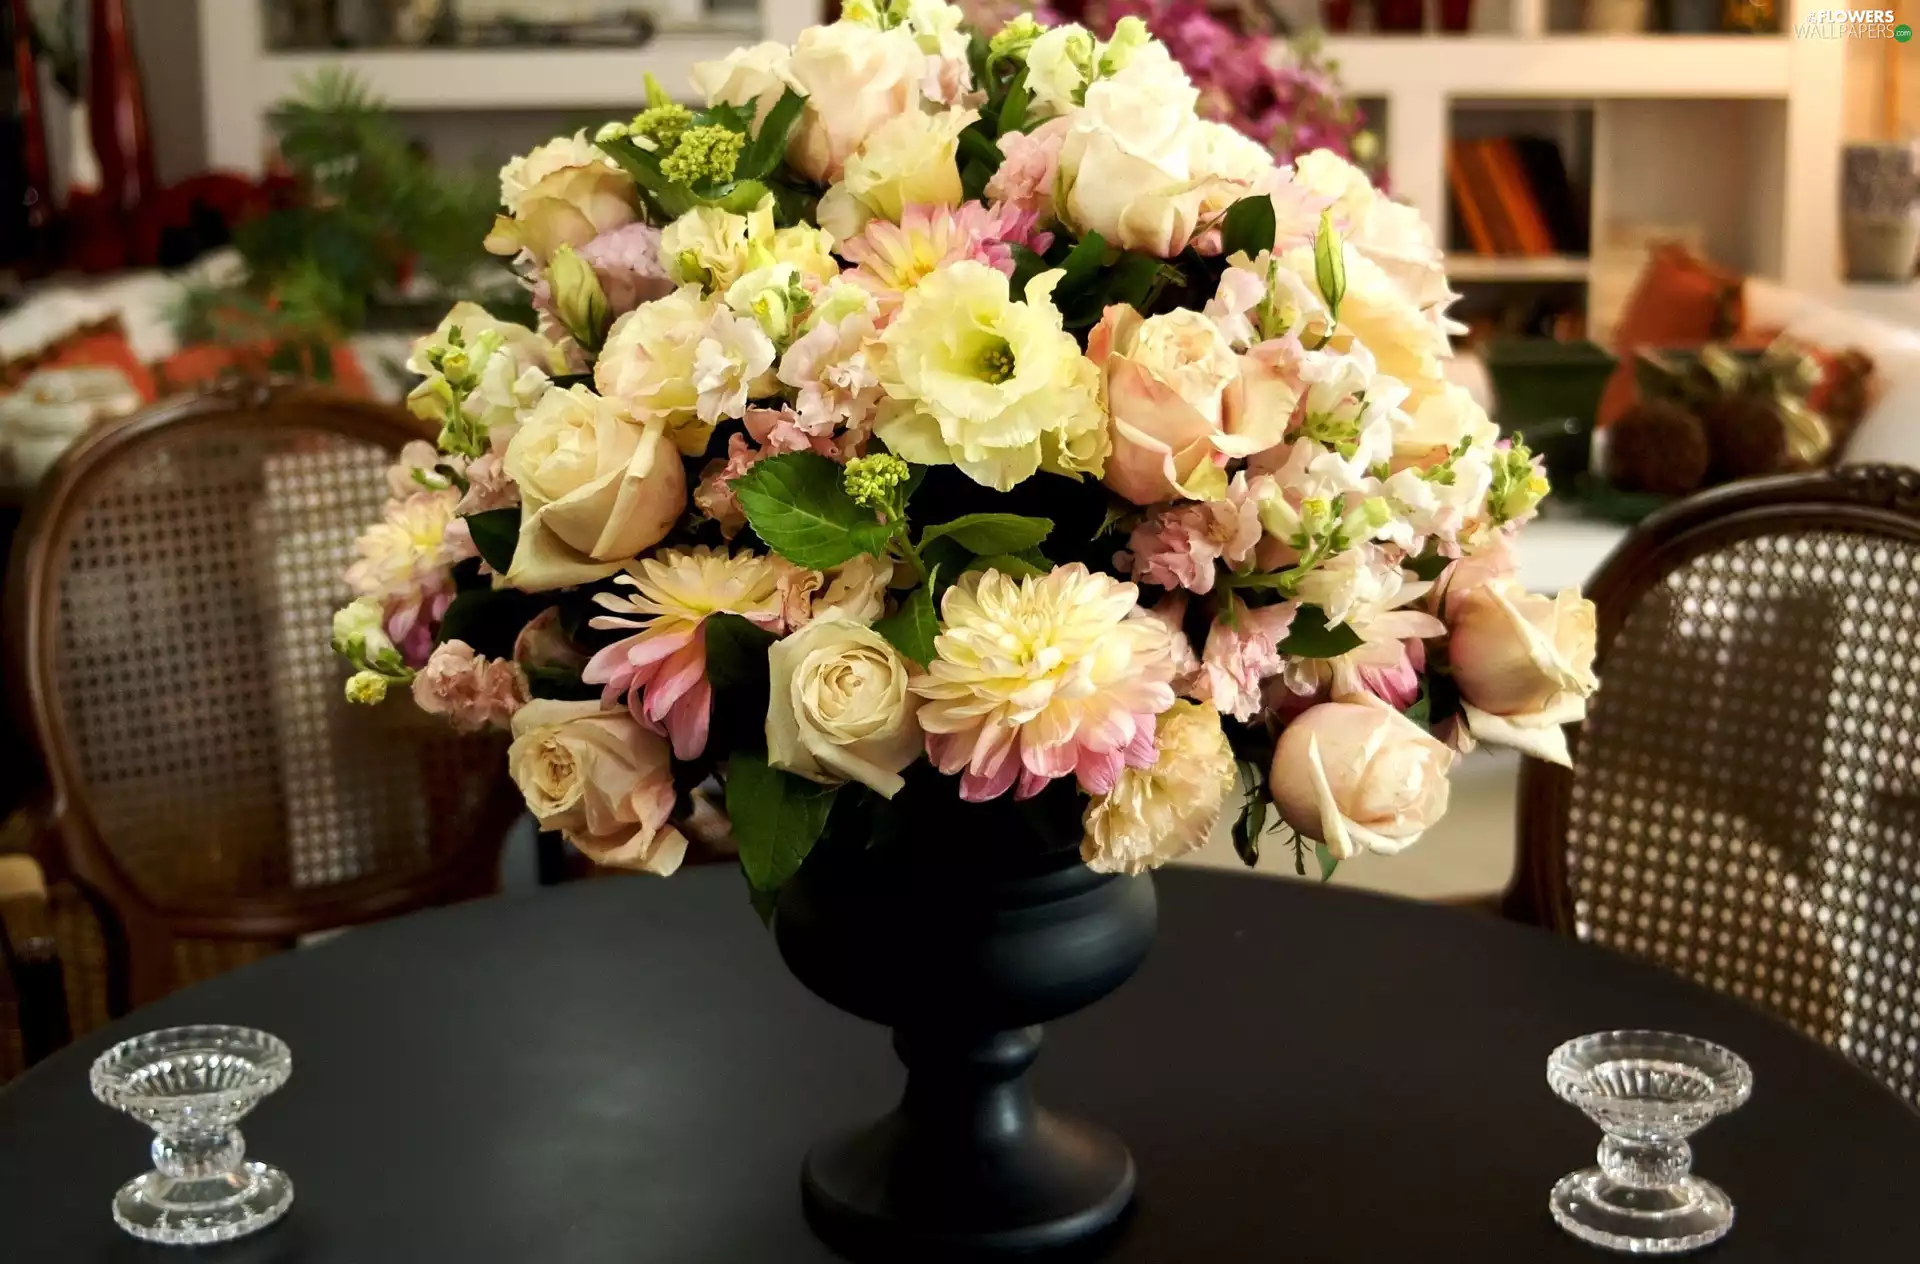 Table, flowers, candlesticks, bouquet